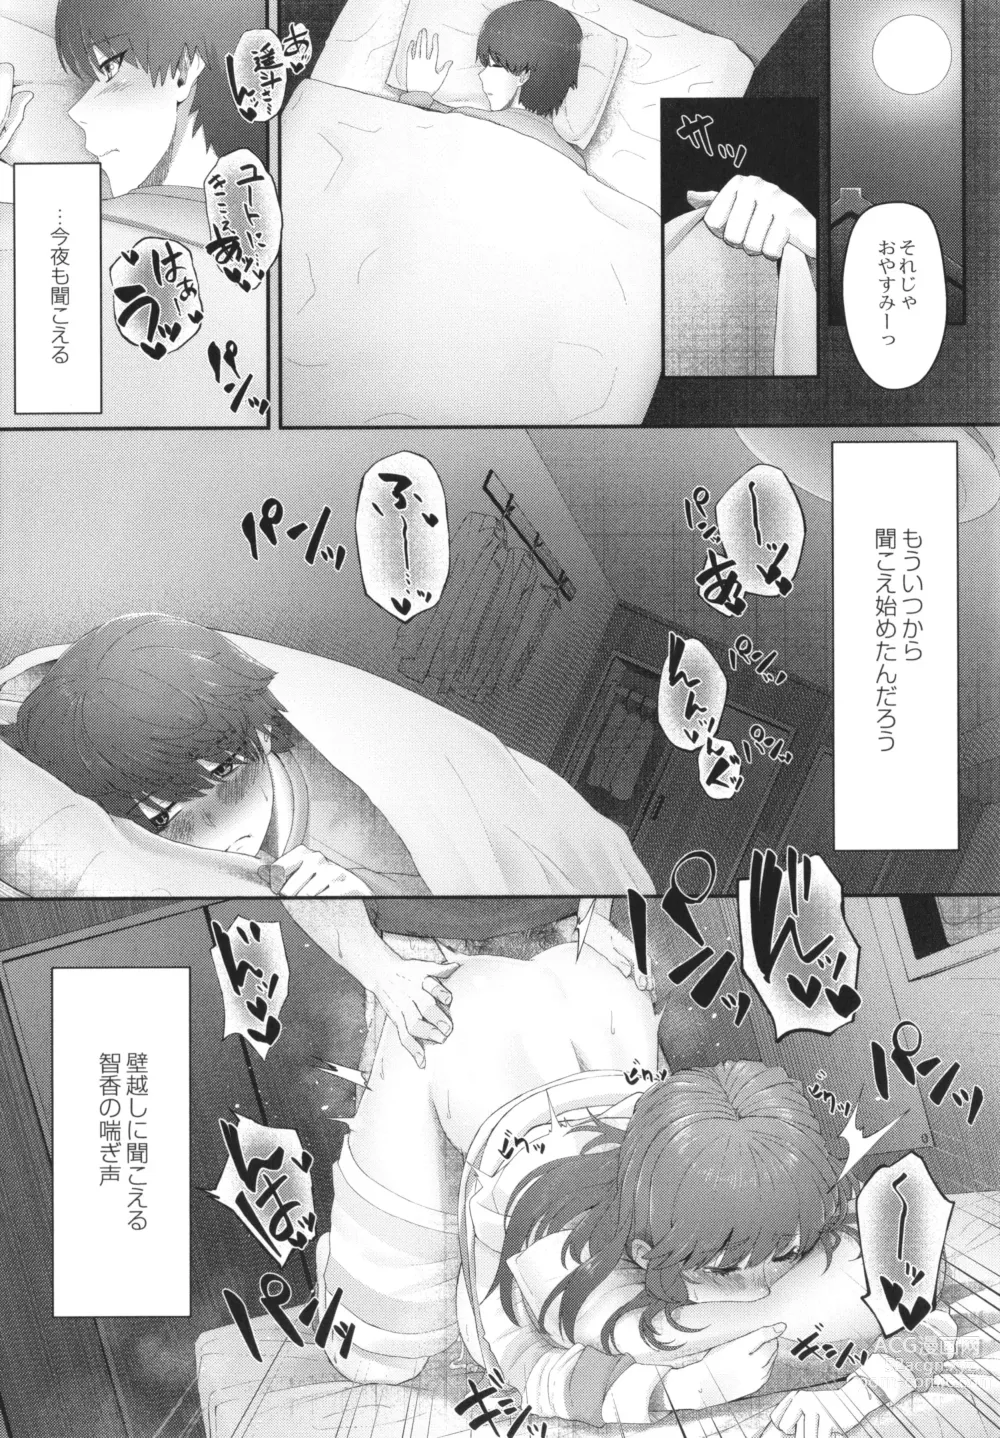 Page 18 of manga Kakuregoto